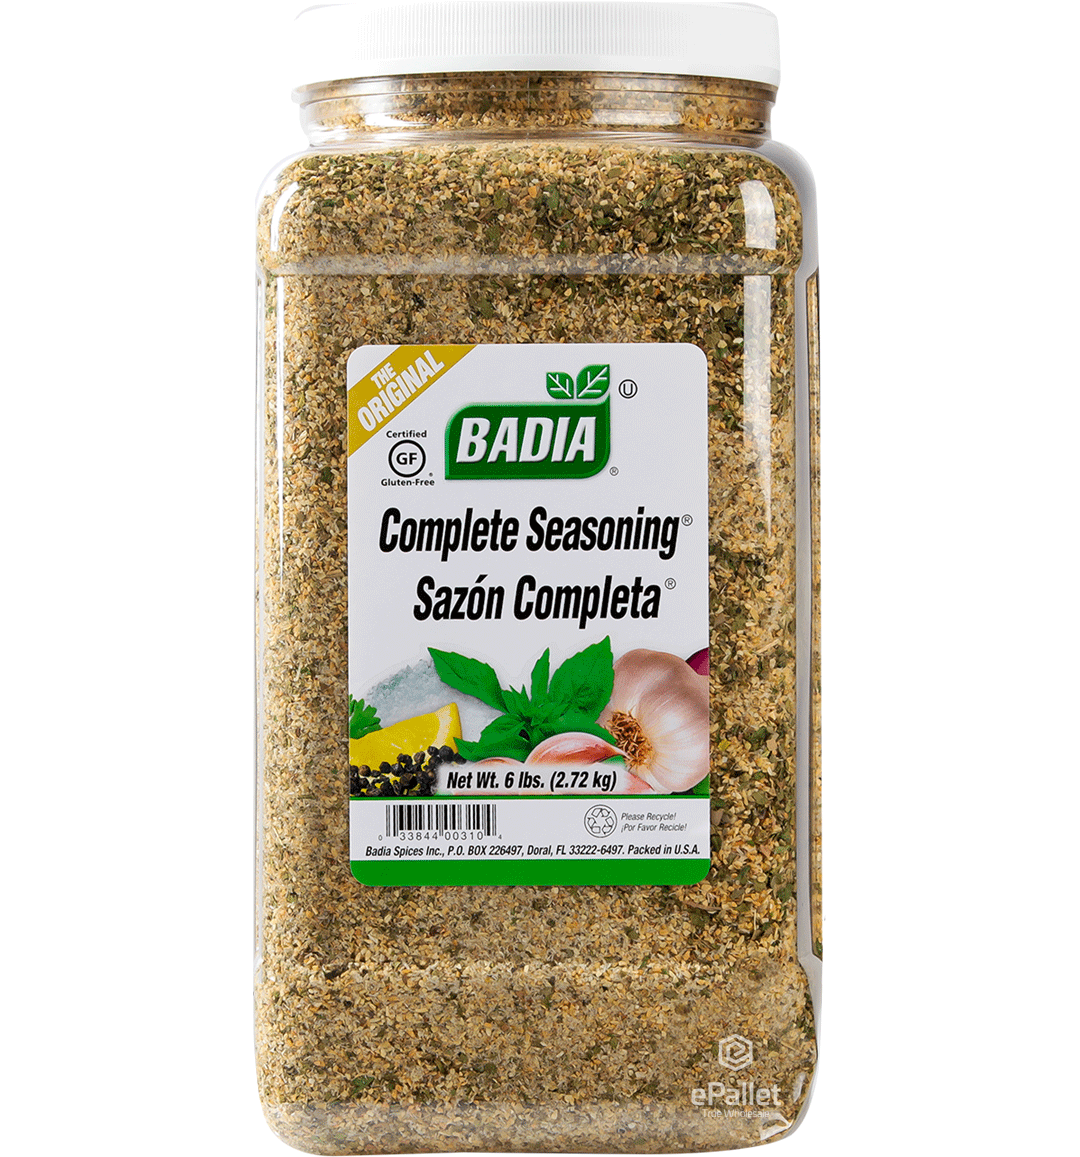 Badia Complete Seasoning Wholesale Shop at World Foods Wholesale